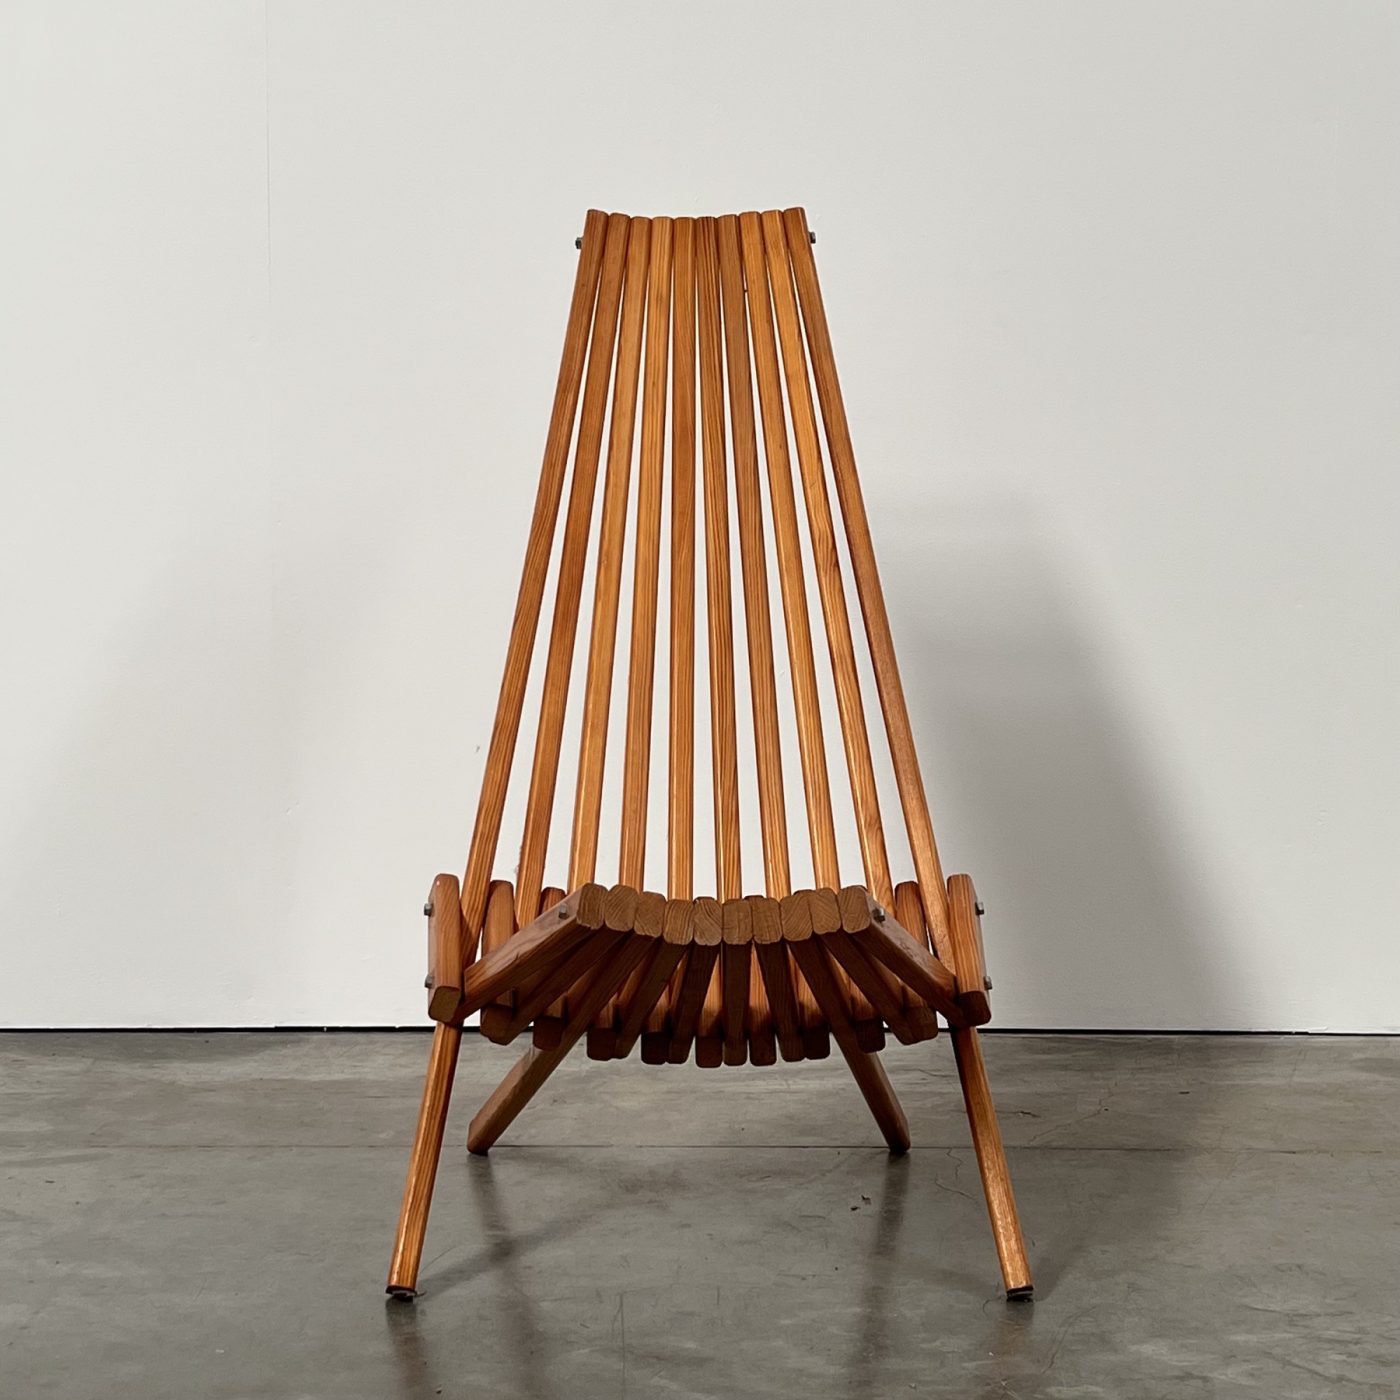 objet-vagabond-folding-chair0002